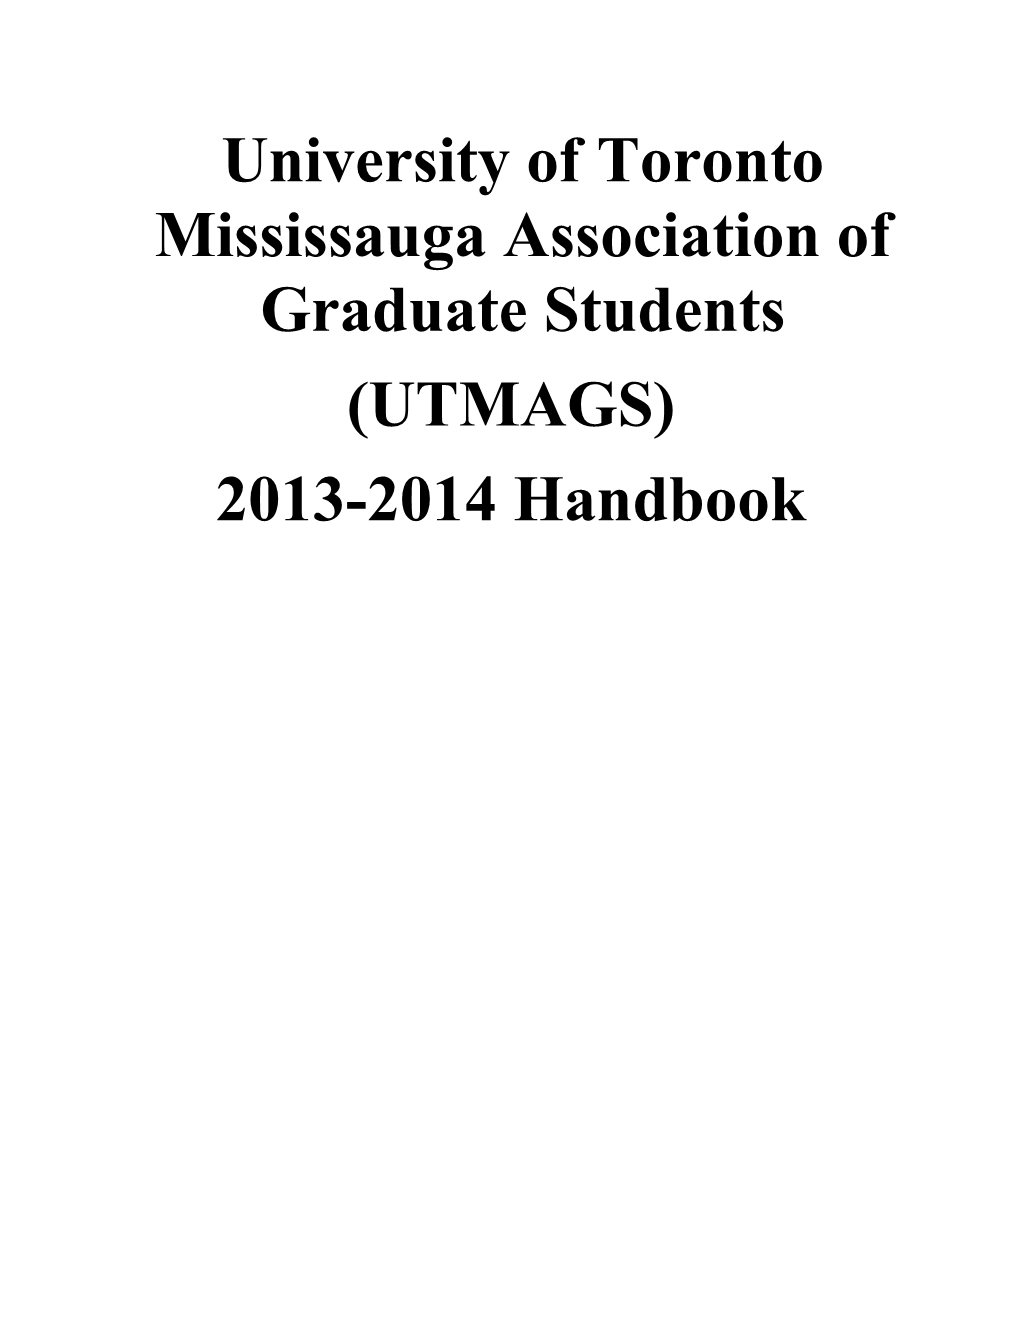 University of Toronto Mississauga Association of Graduate Students